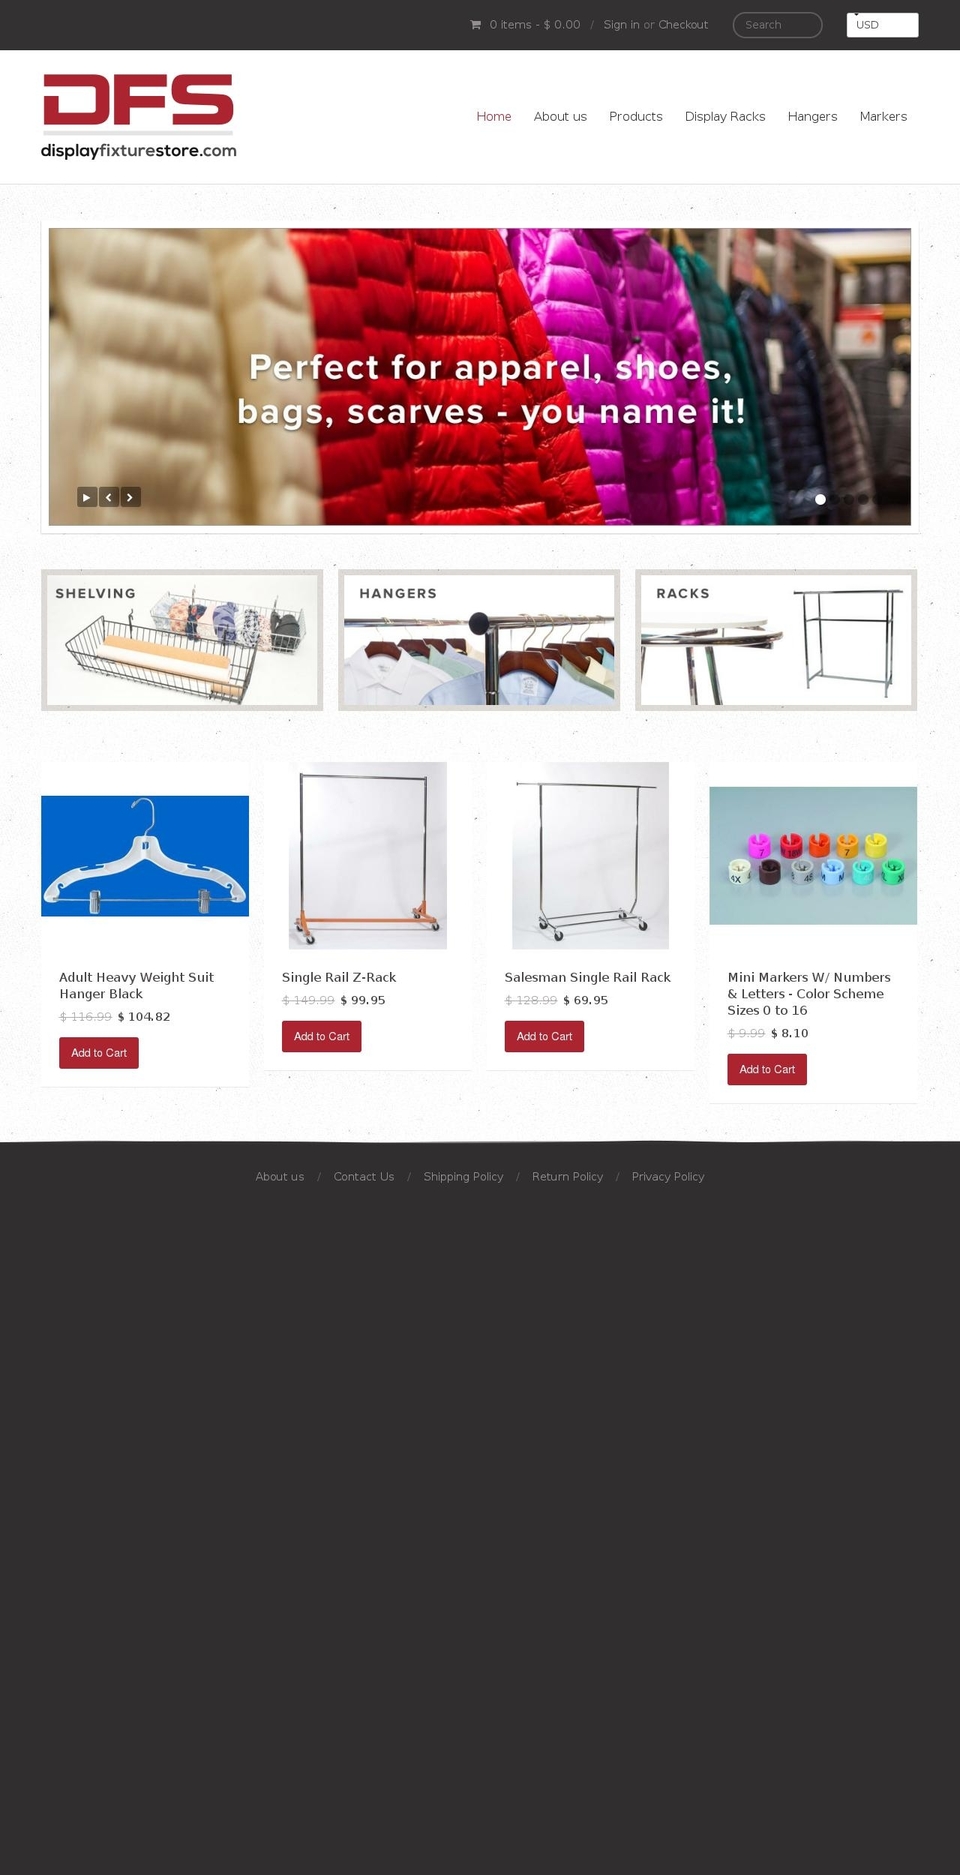 displayfixturestore.com shopify website screenshot